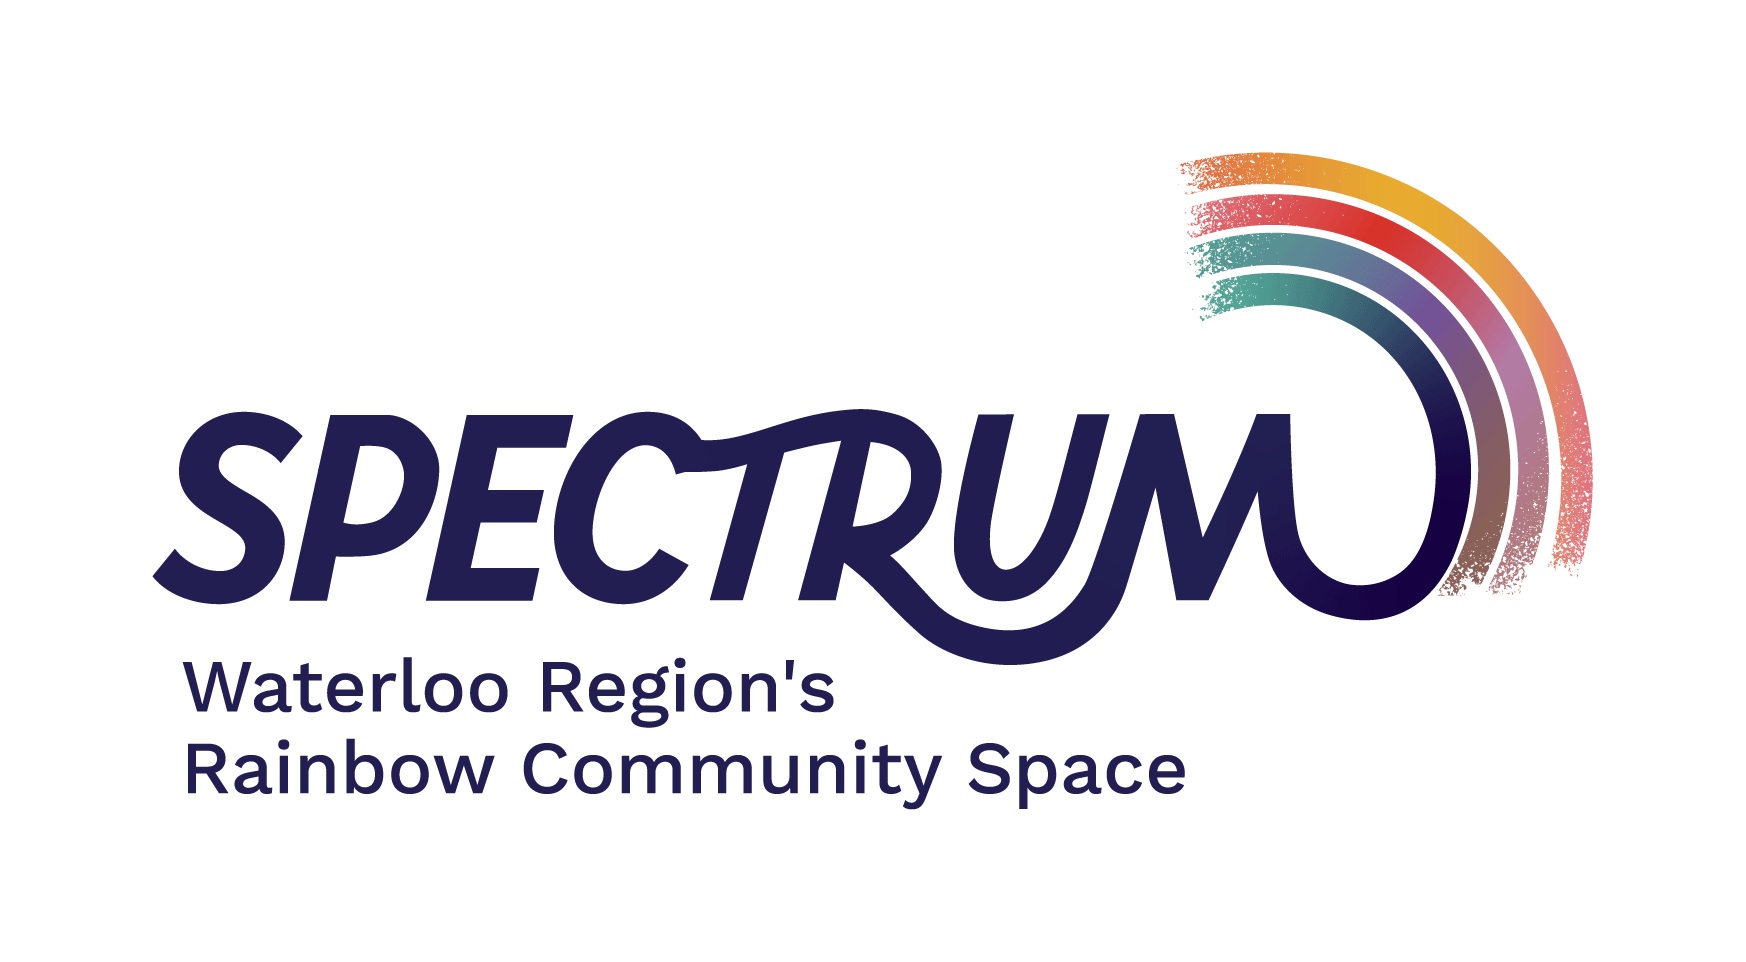 SPECTRUM Logo with slogan: "Waterloo Region's Rainbow Community Space".